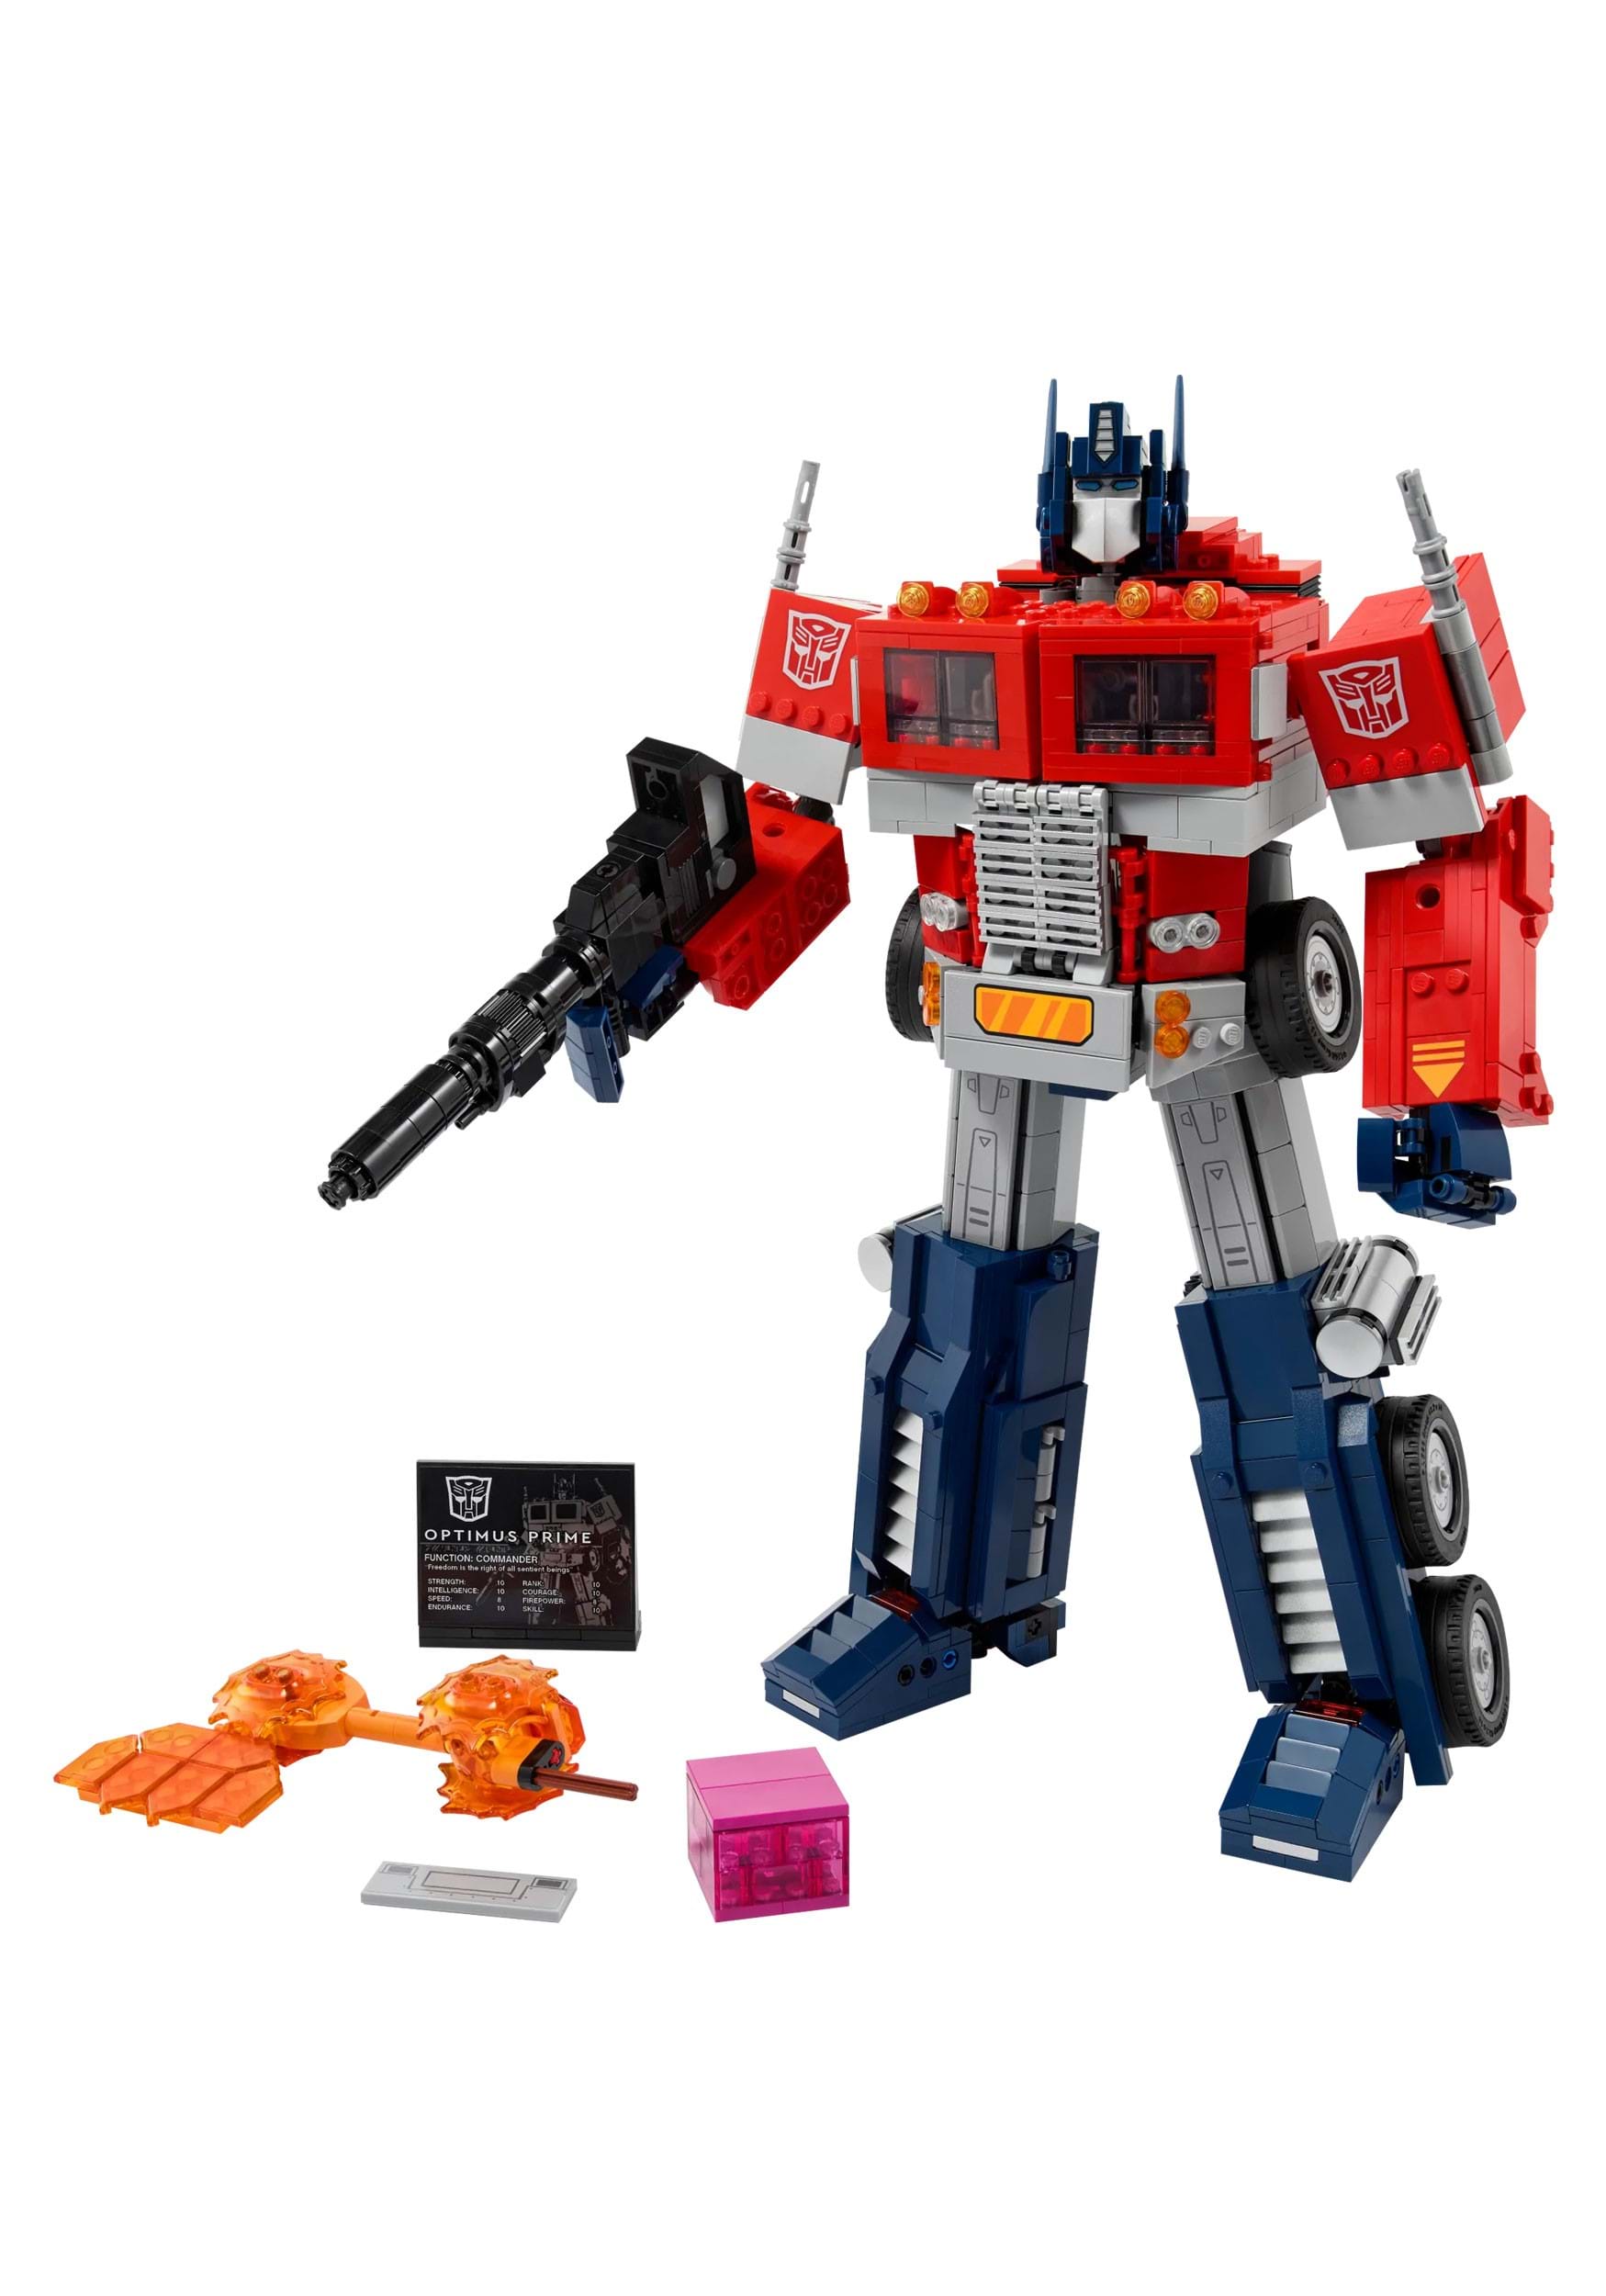 LEGO Transformers Optimus Prime Building Kit